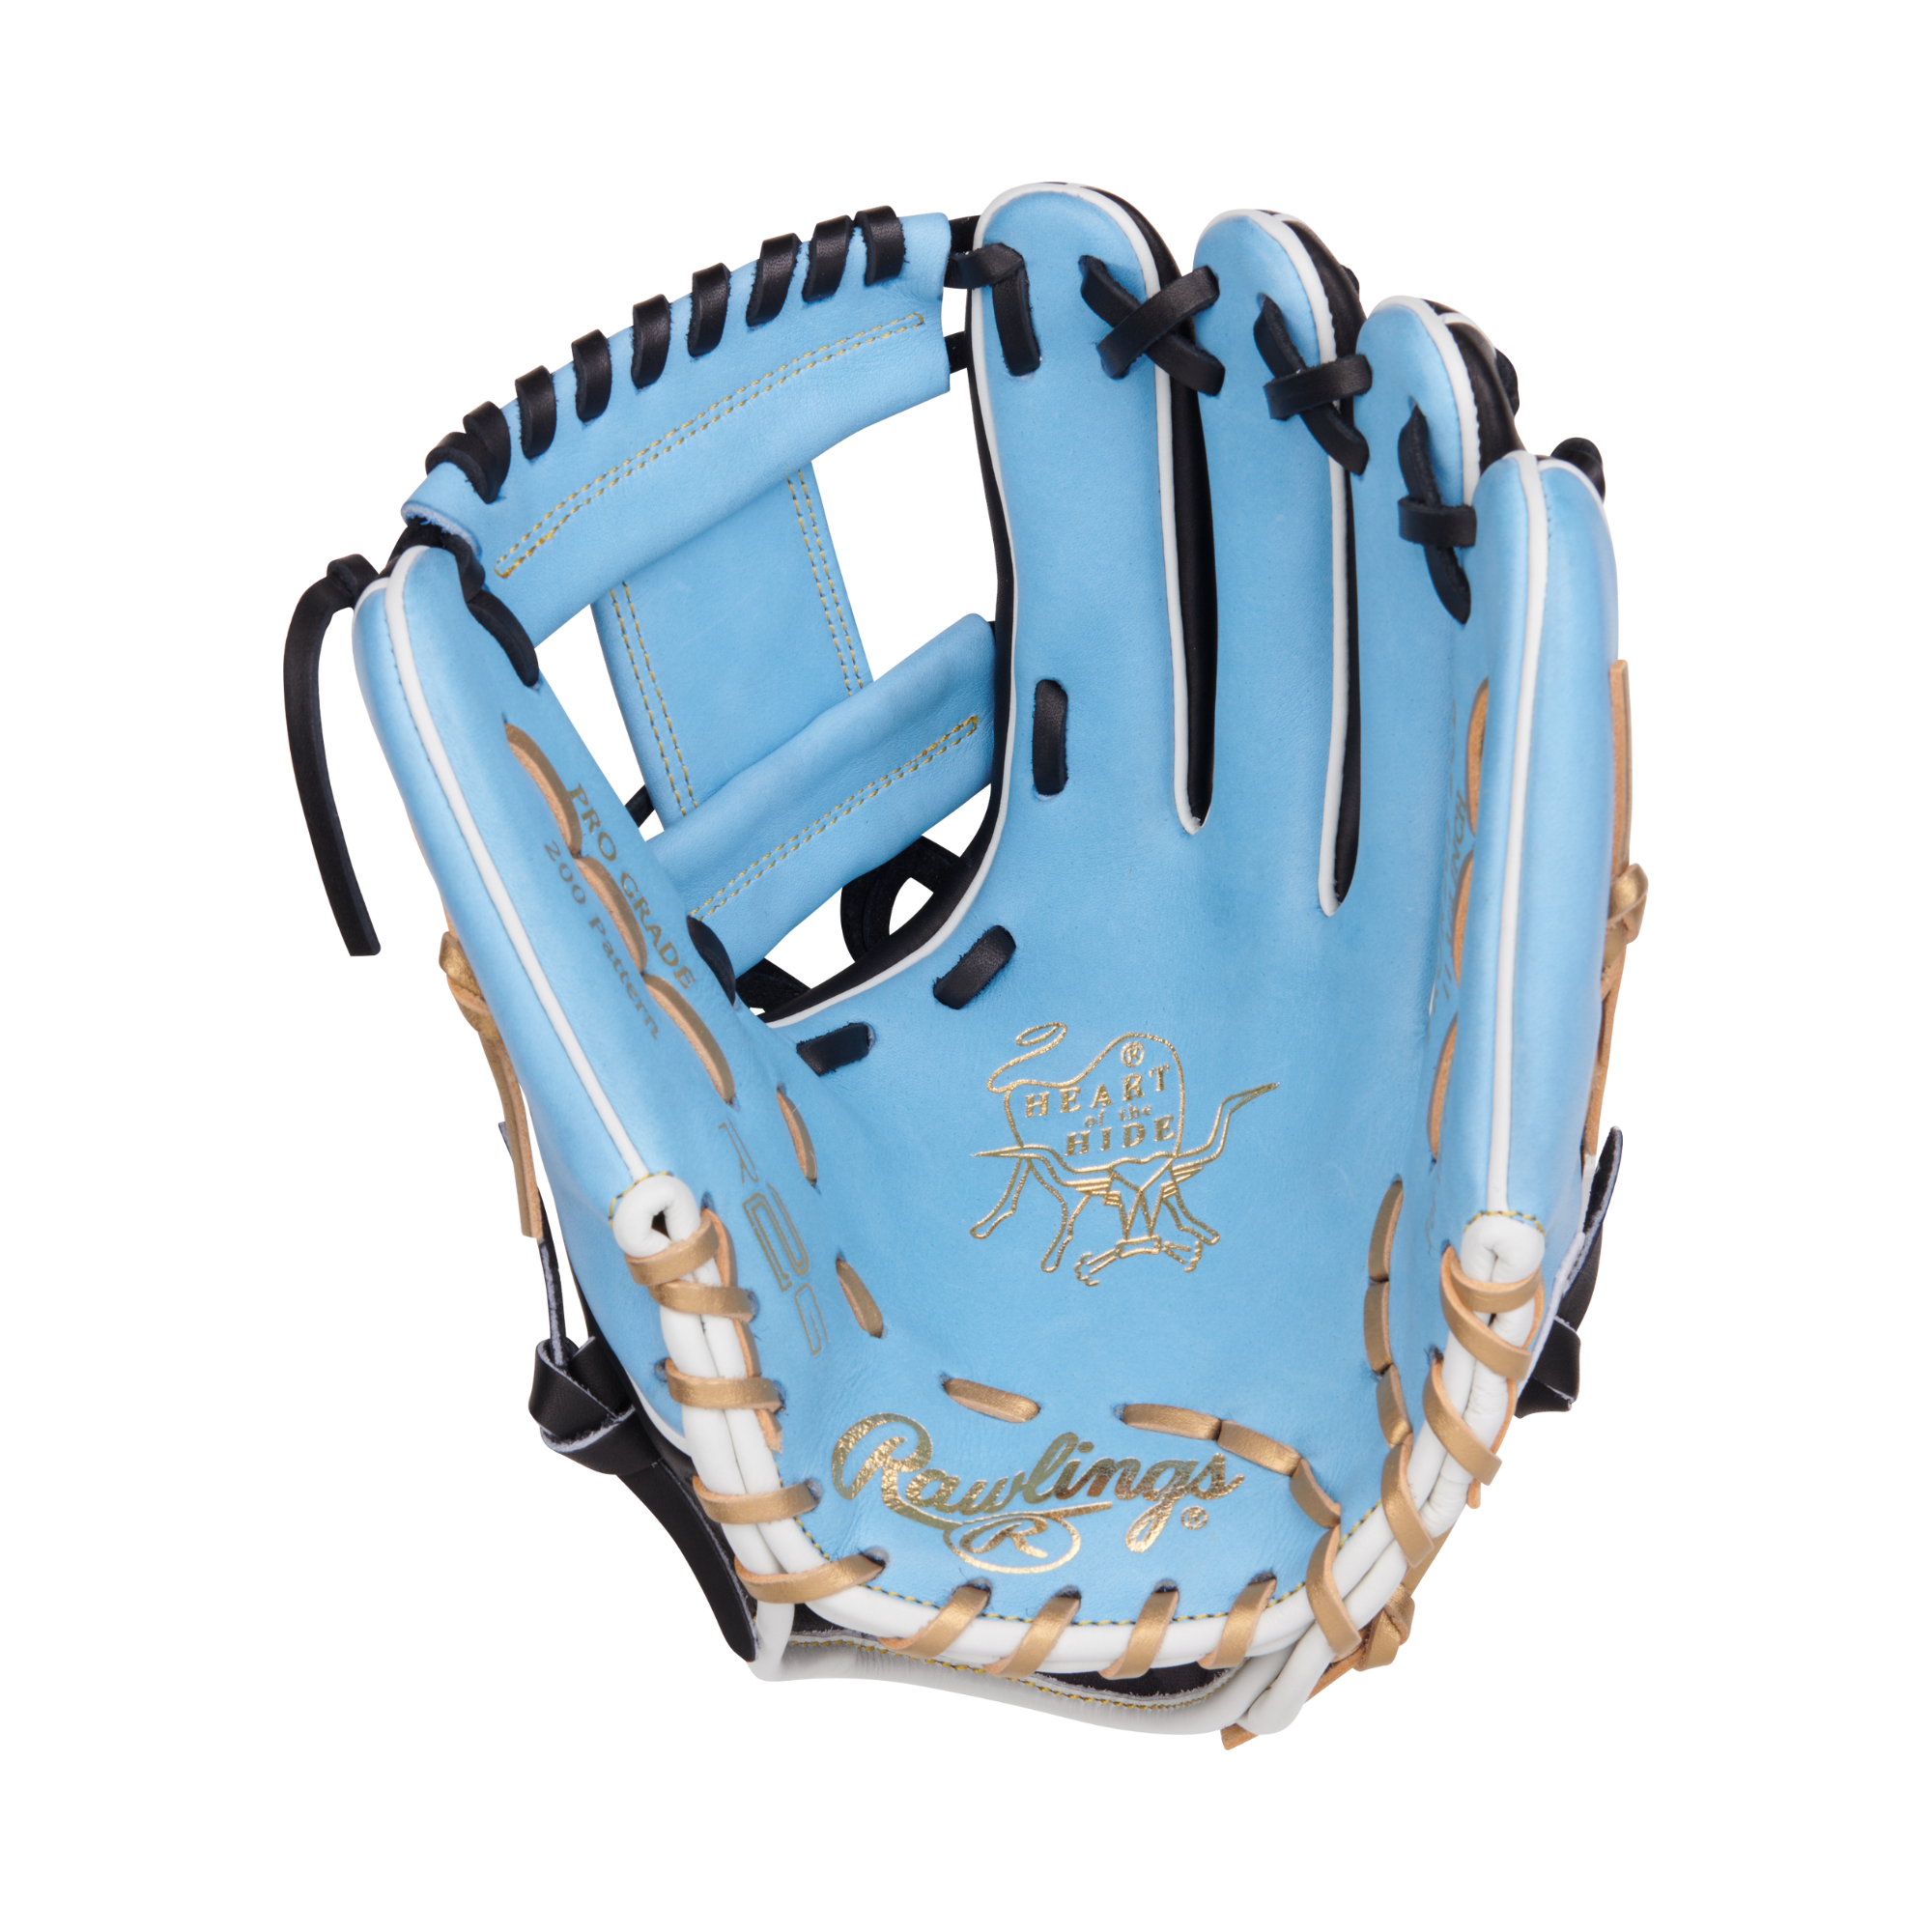 Rawlings Heart Of The Hide R2G Technology Series Baseball Glove 11.75" RHT